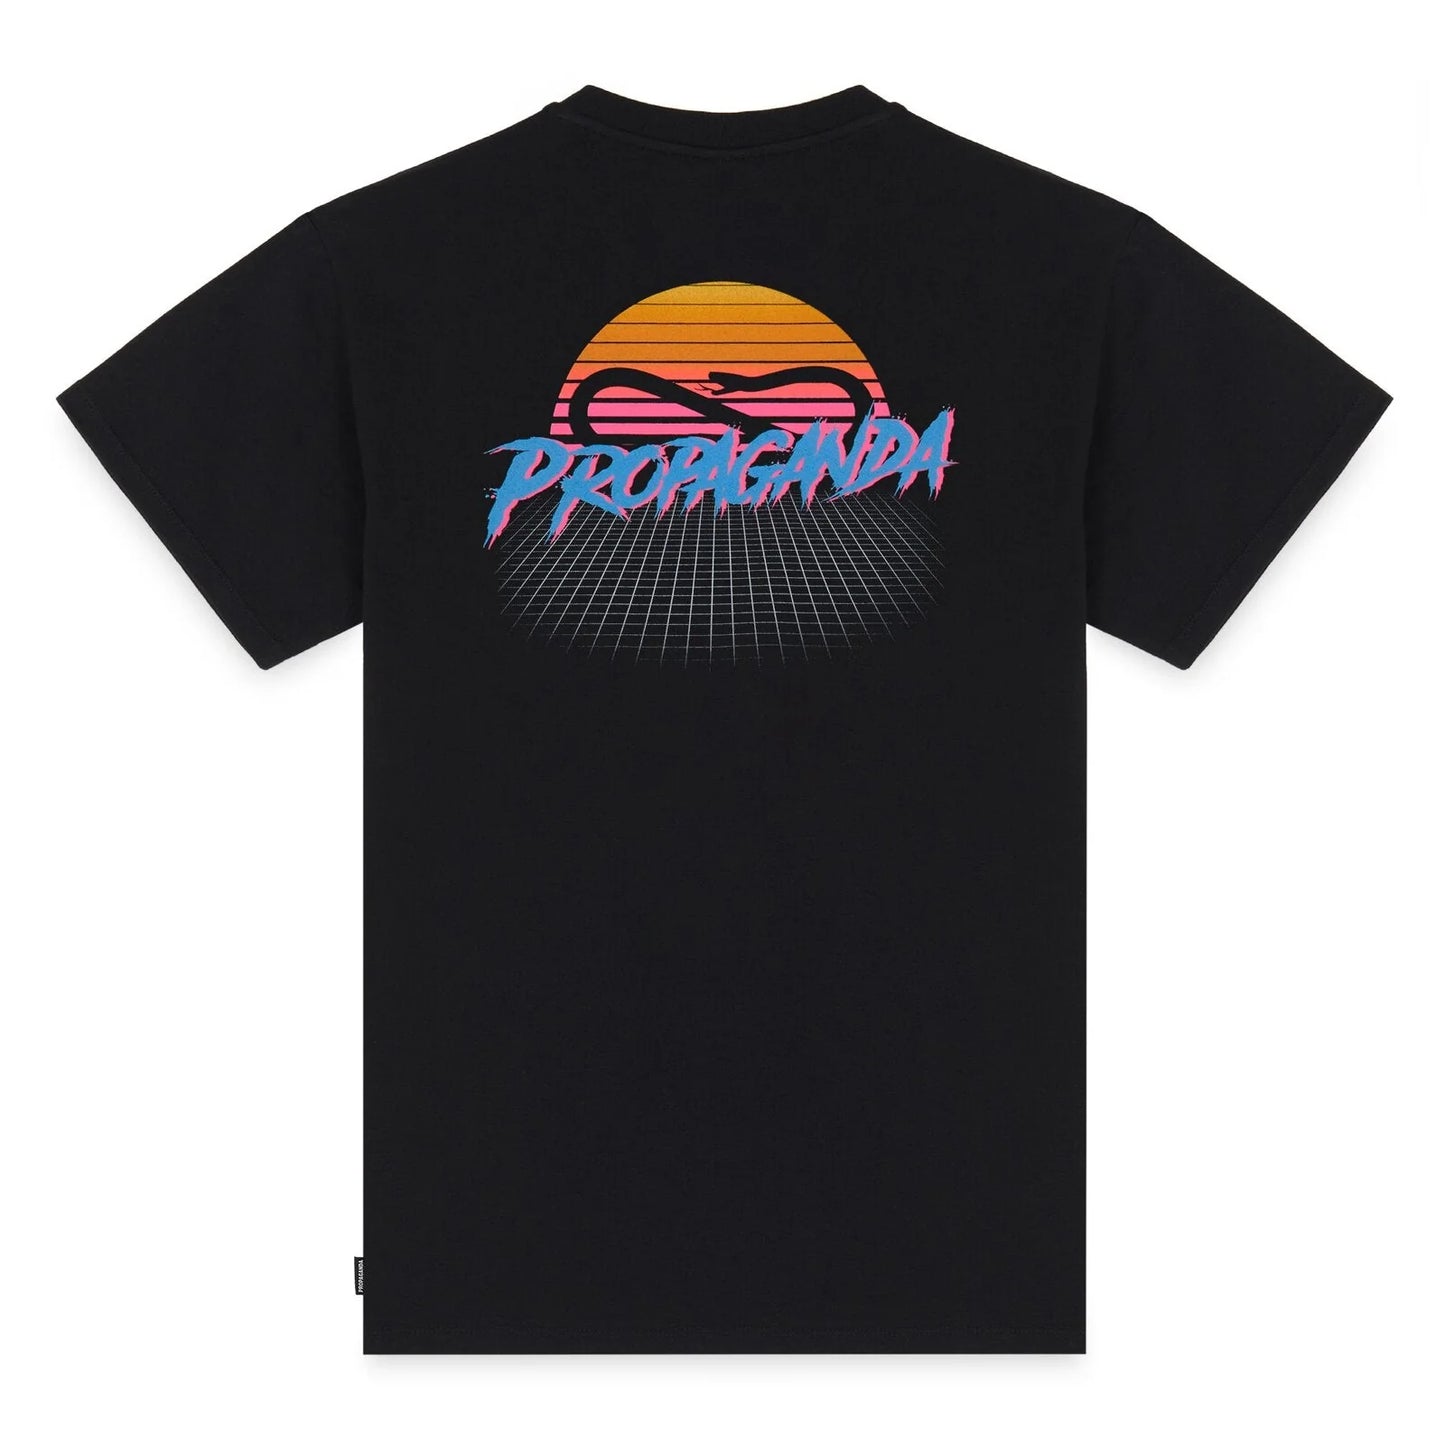 Propaganda T-Shirt Drive nero